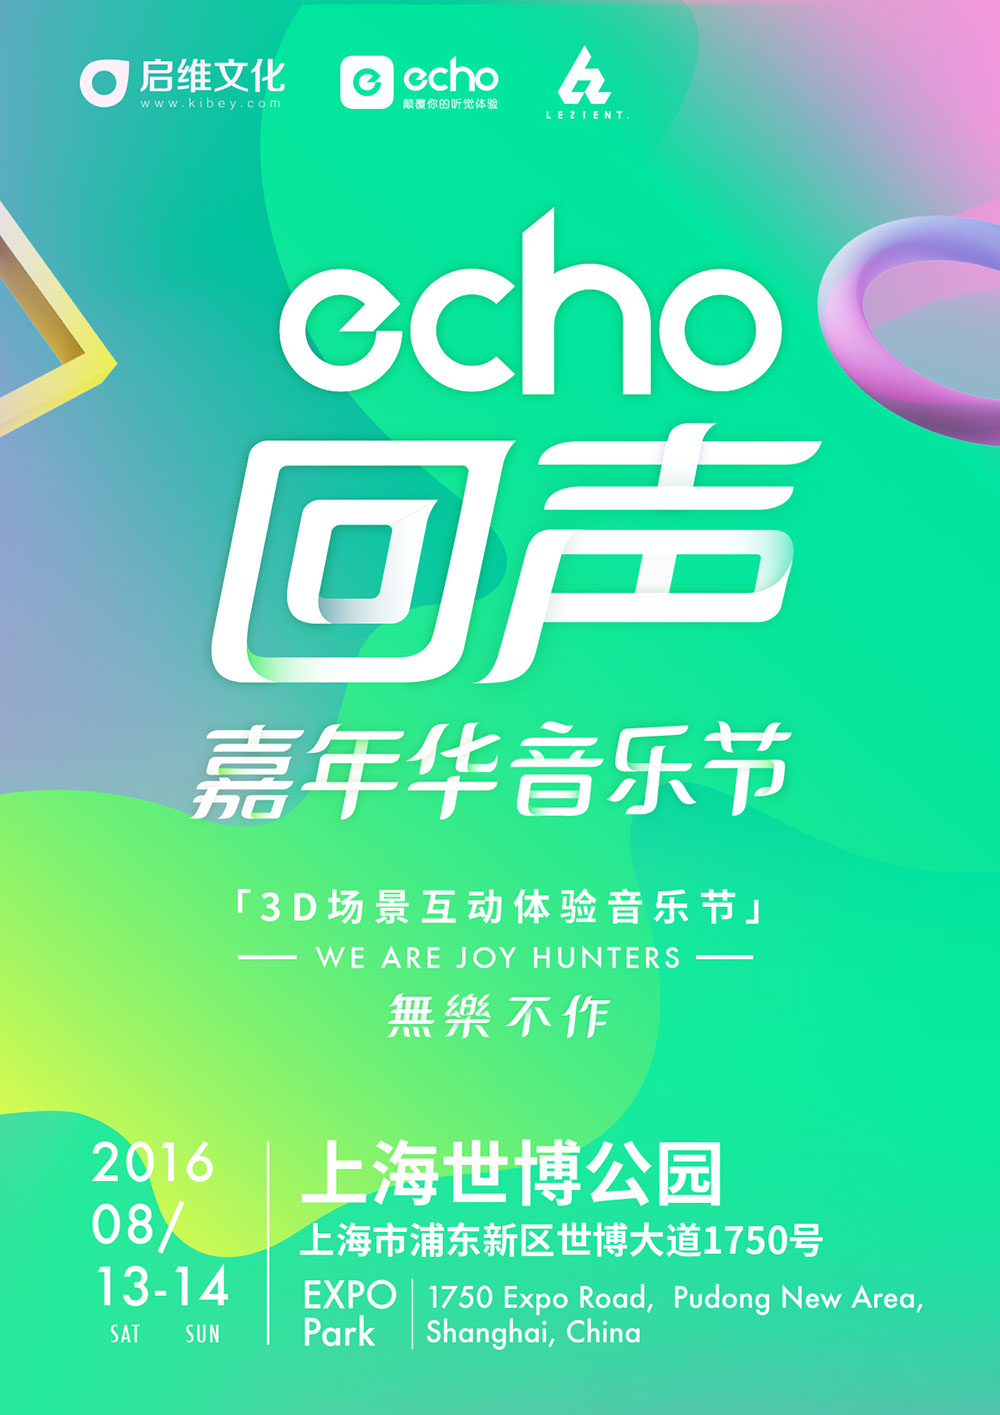 echo回声嘉年华音乐节海报设计